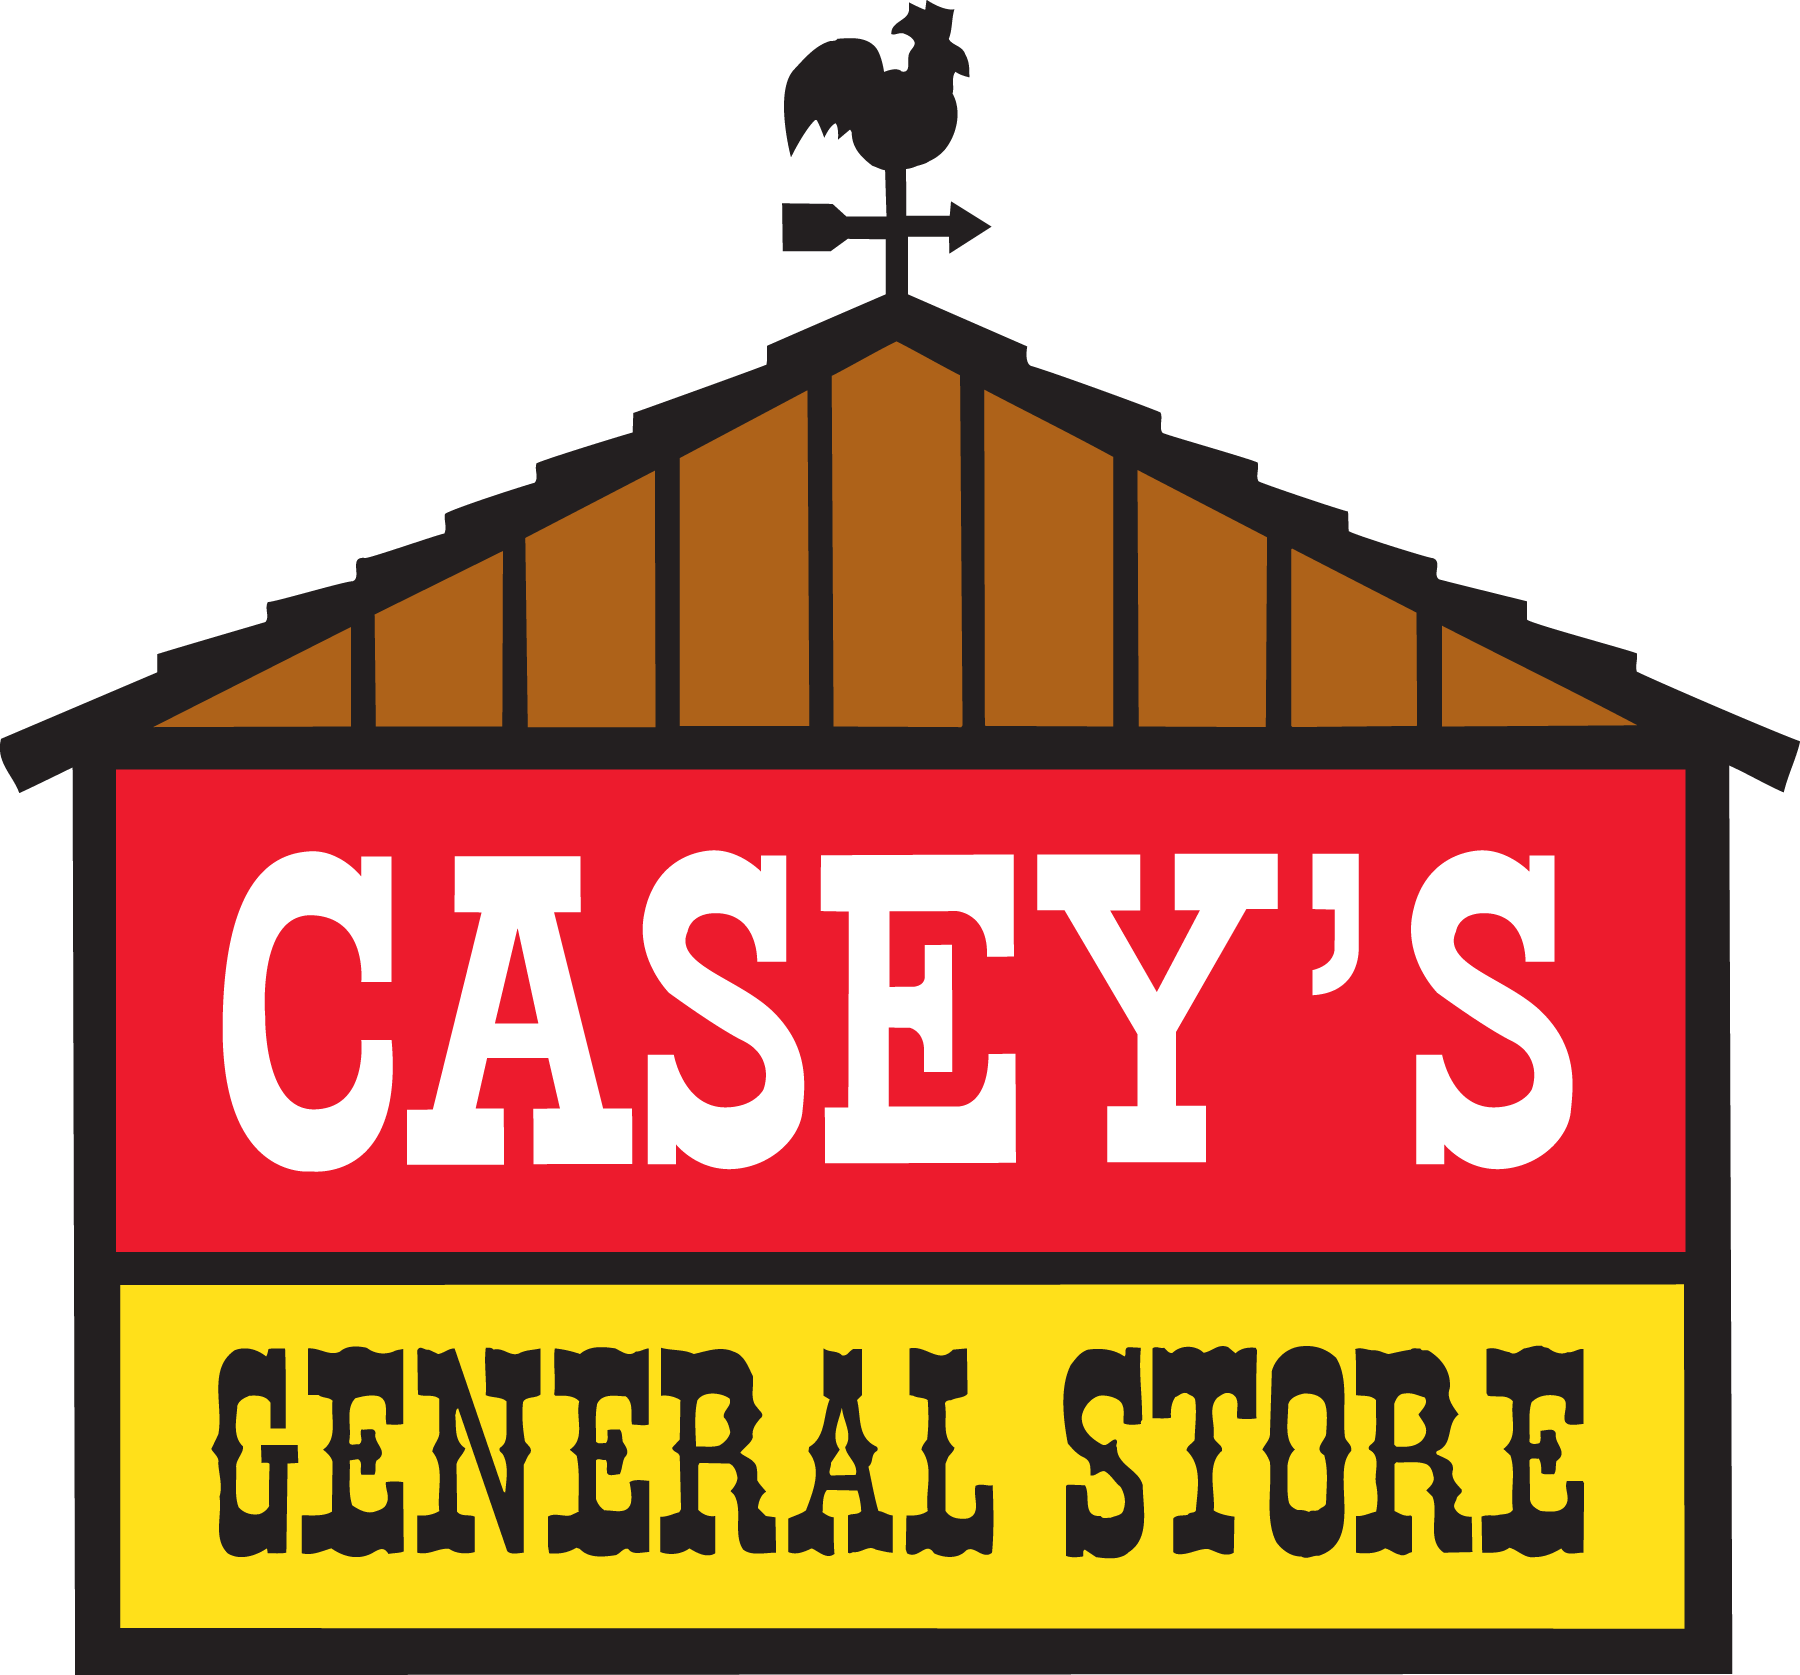 Caseys General Stores Logo - Caseys General Store (1800x1675)